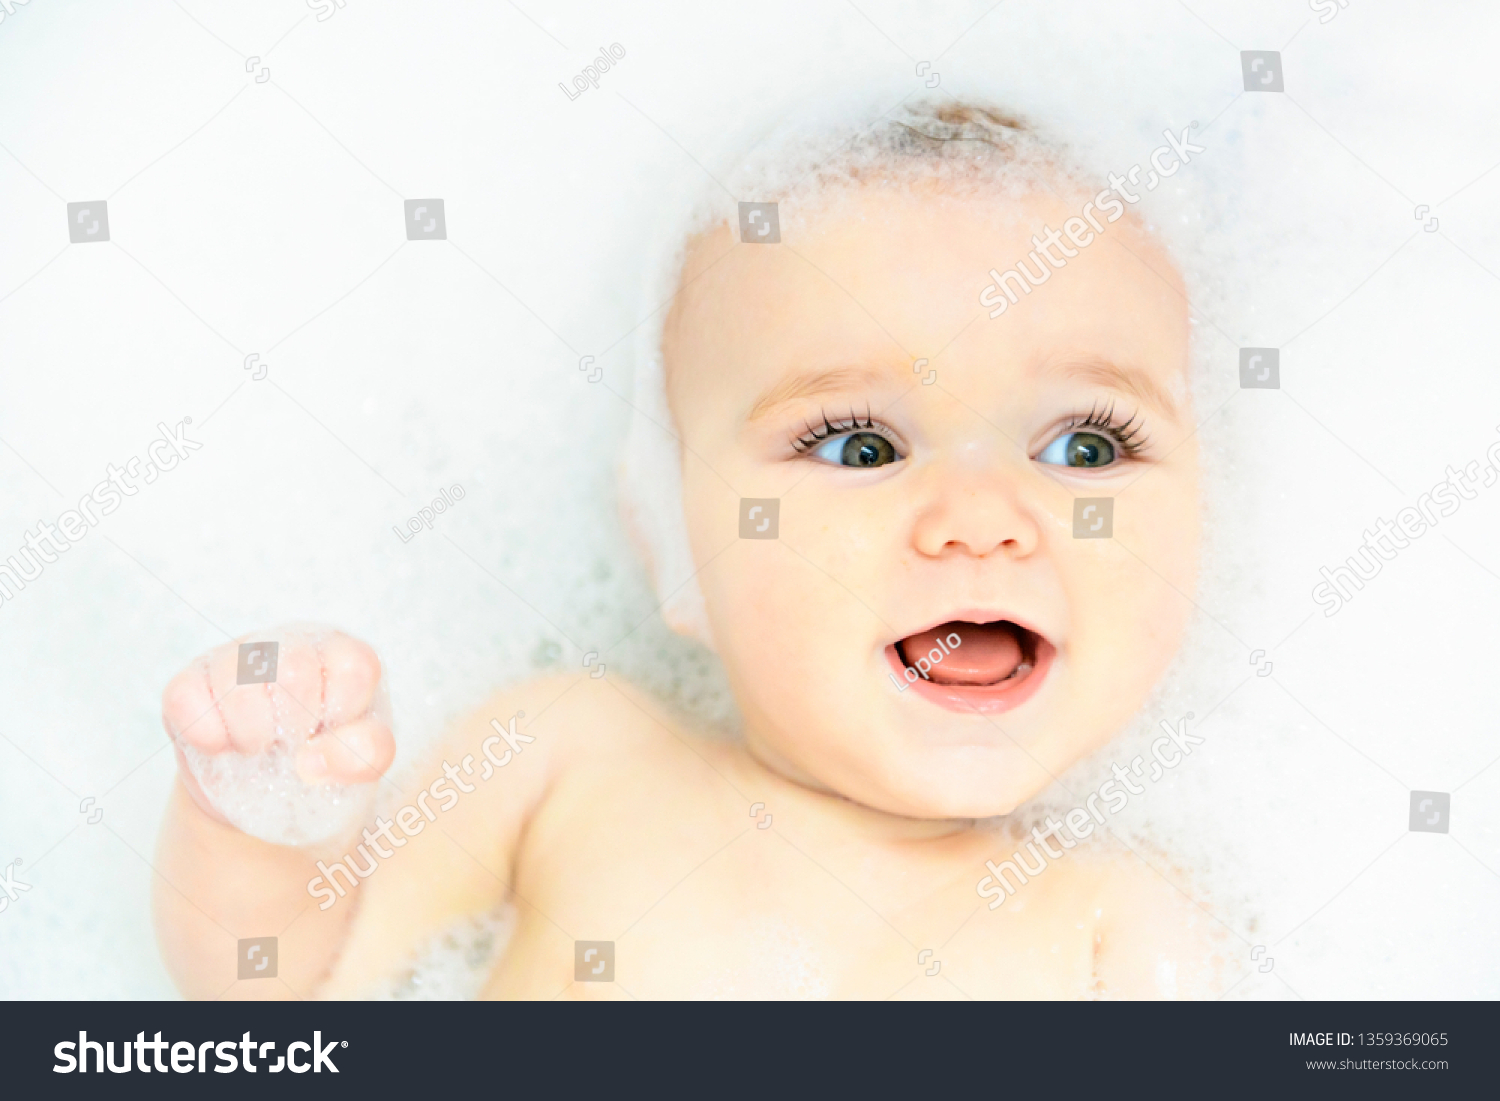 Baby Girl Bathes Bath Foam Soap Stock Photo Shutterstock